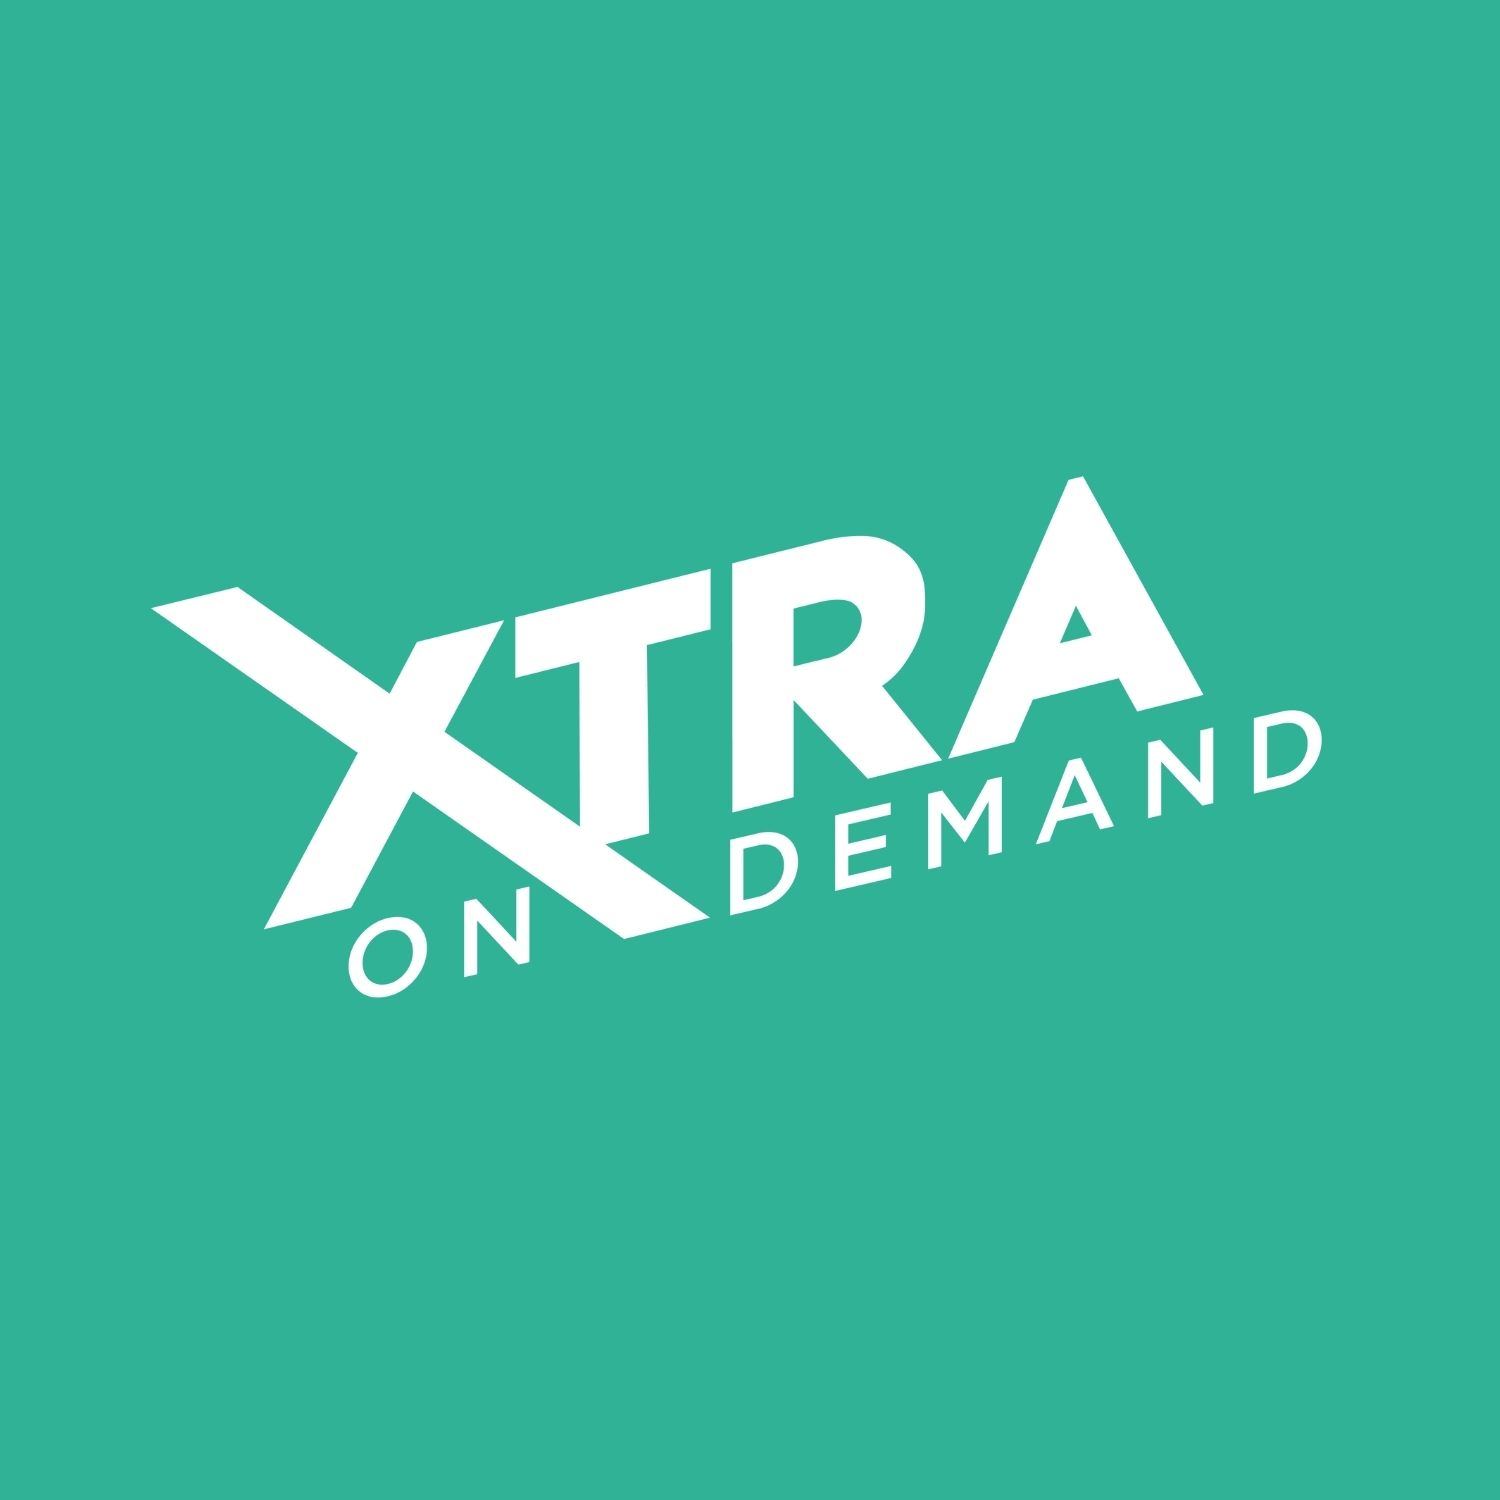 Affinity Xtra On Demand